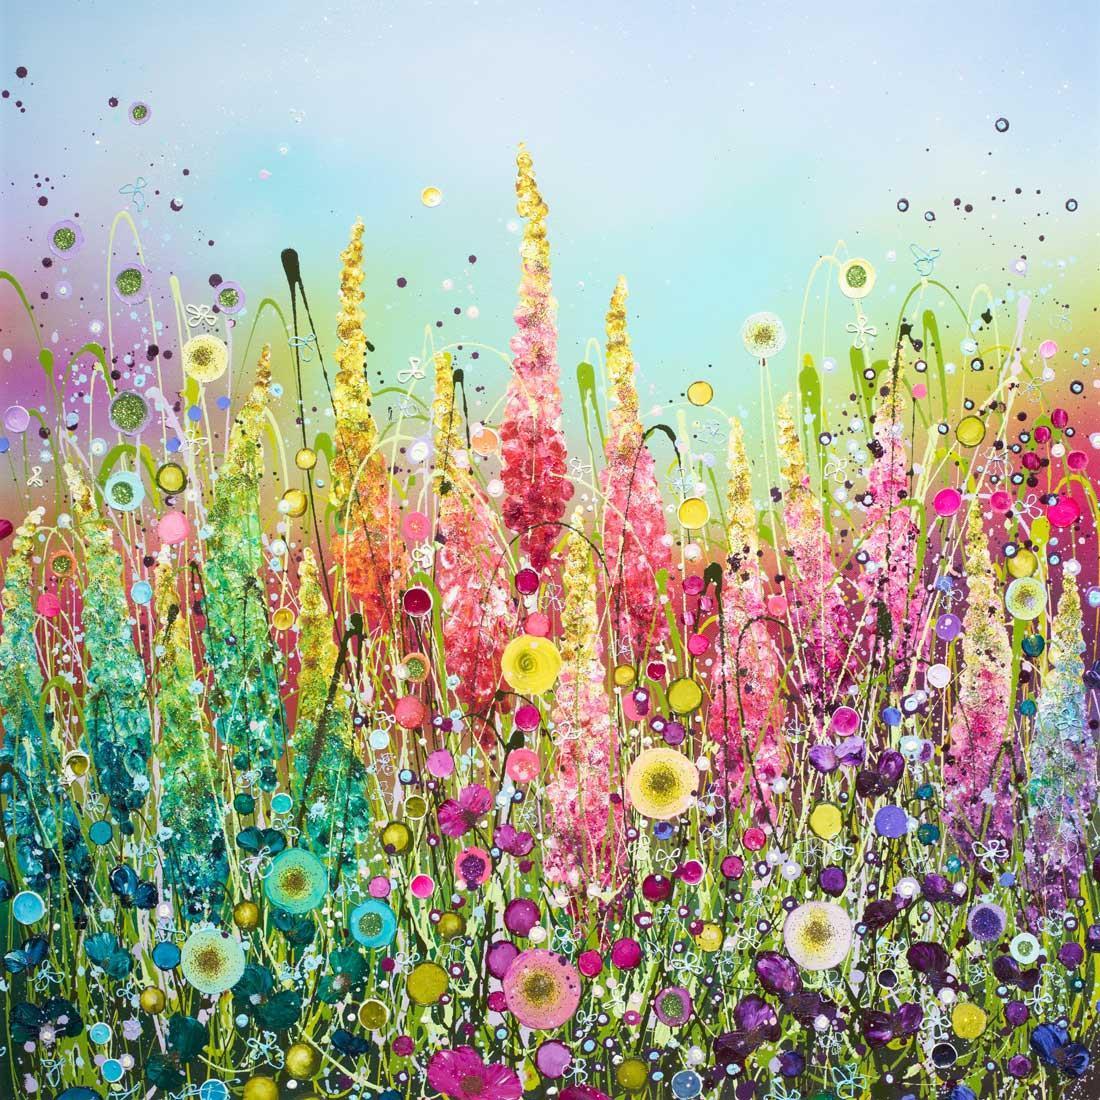 All The Exquisite Flowers - Original Leanne Christie